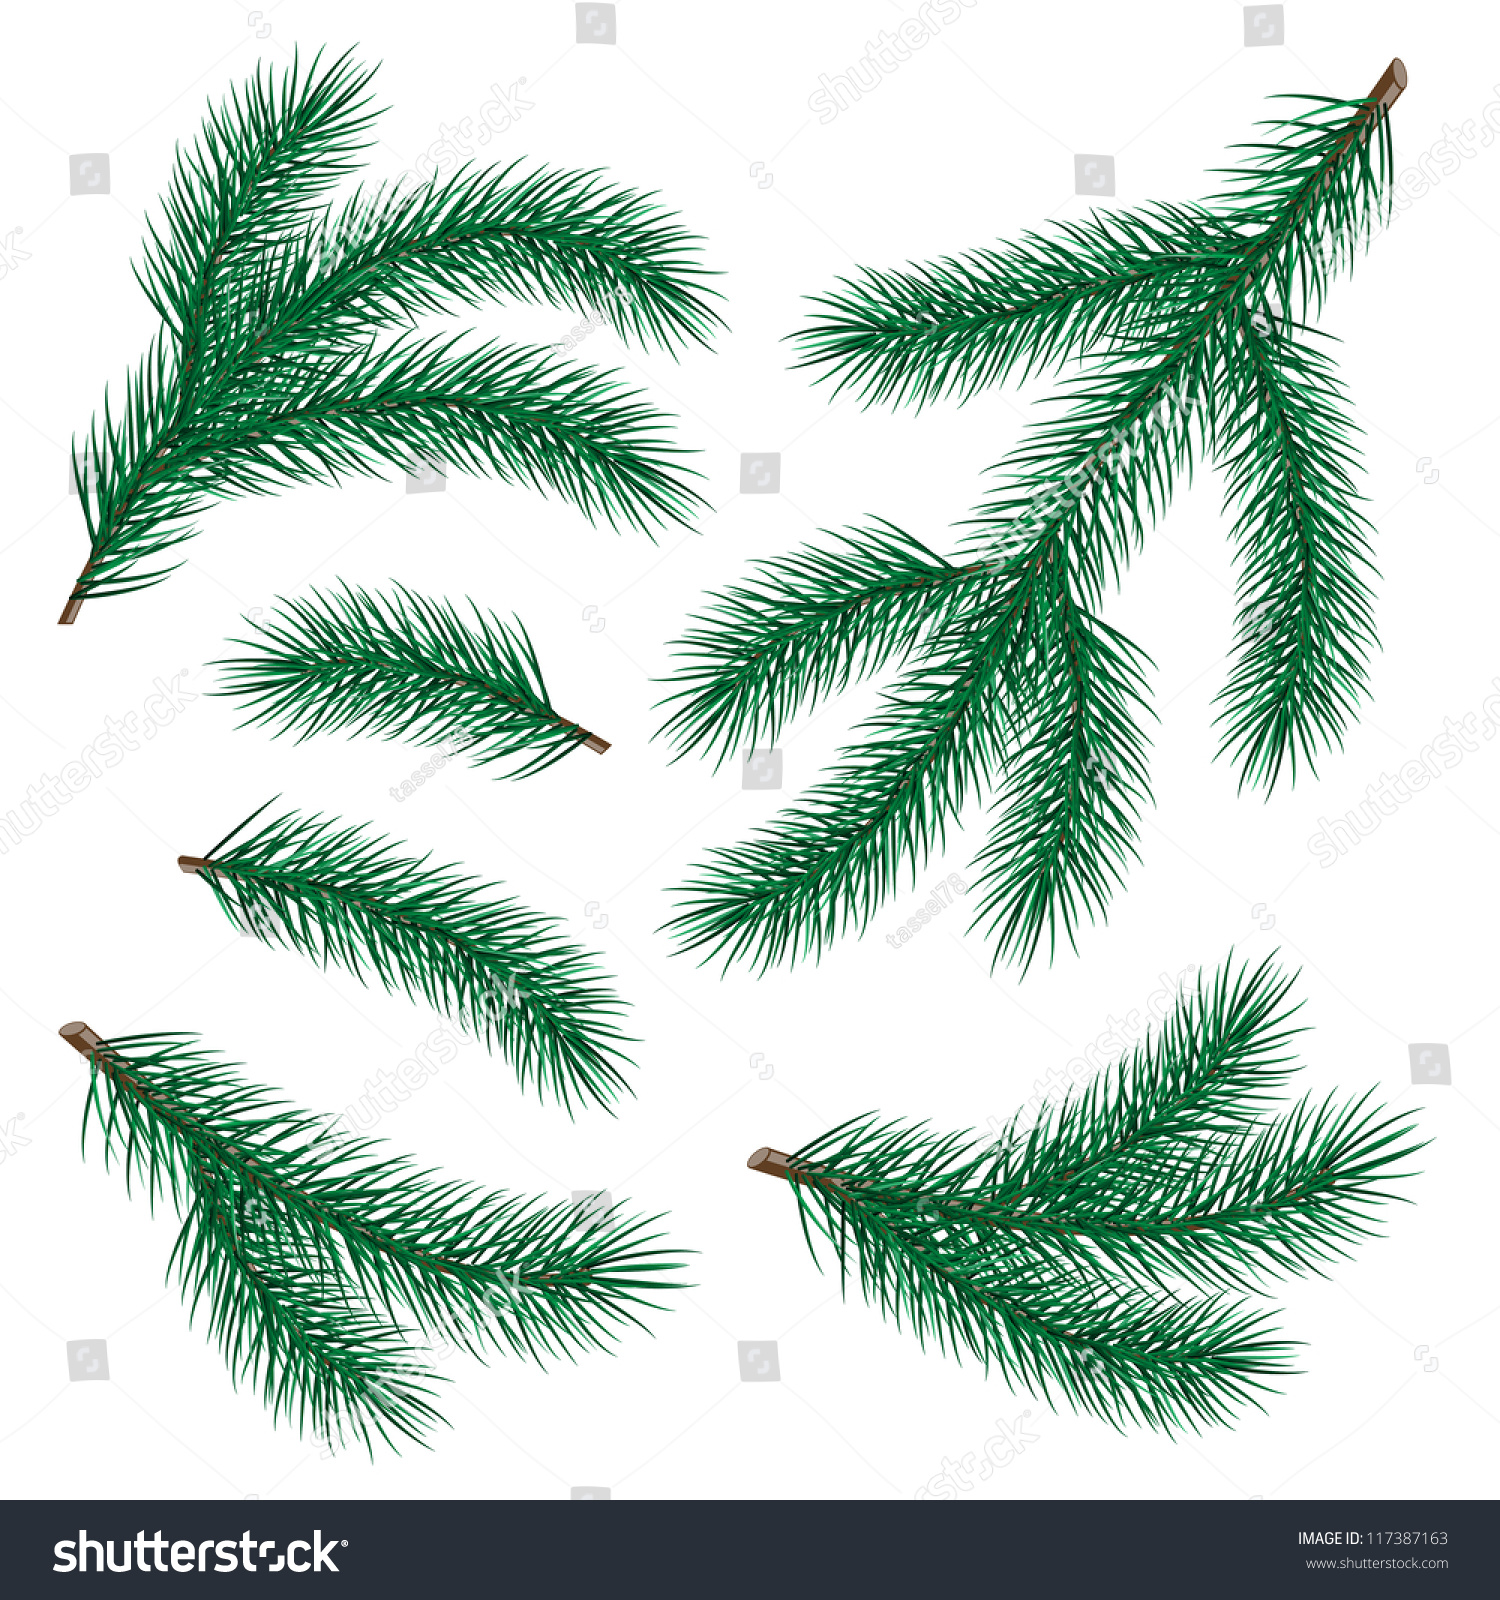 Set Of Fir Branch On White Background. Vector Illustration - 117387163